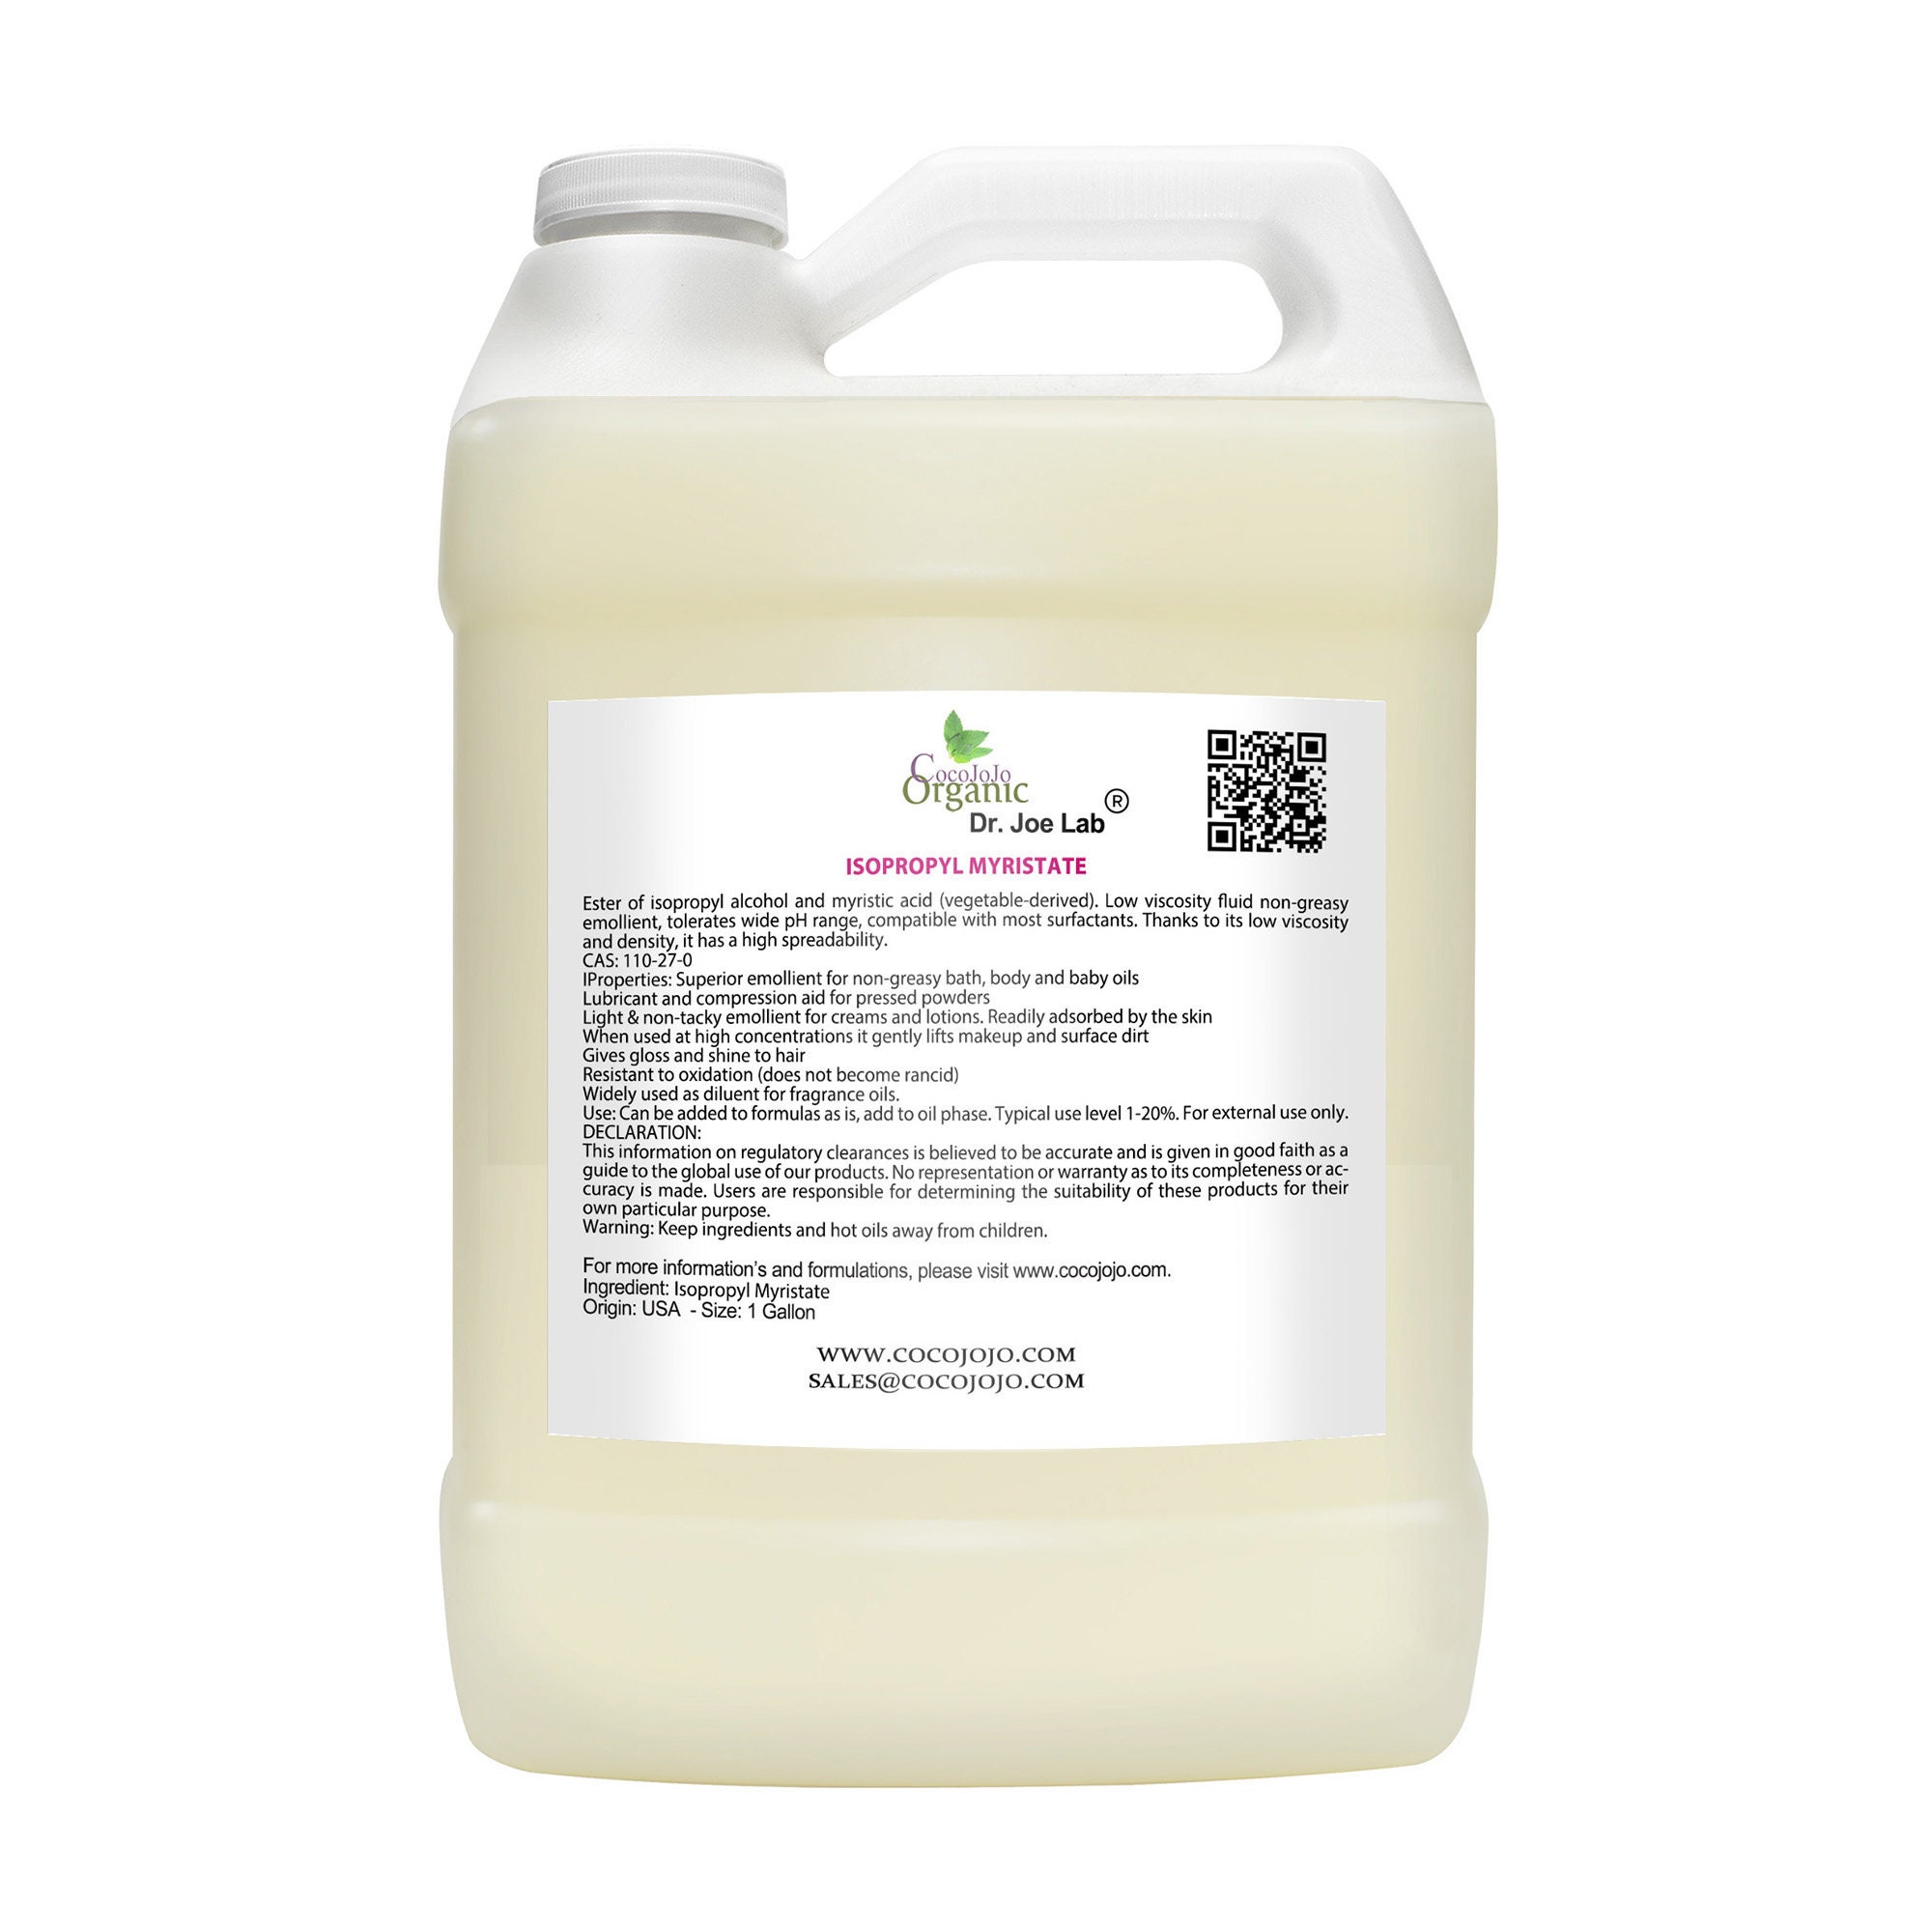 Isopropyl Alcohl Isopropanol 99.9% Pure Rubbing Lab Grade 500ml CAP / Spray